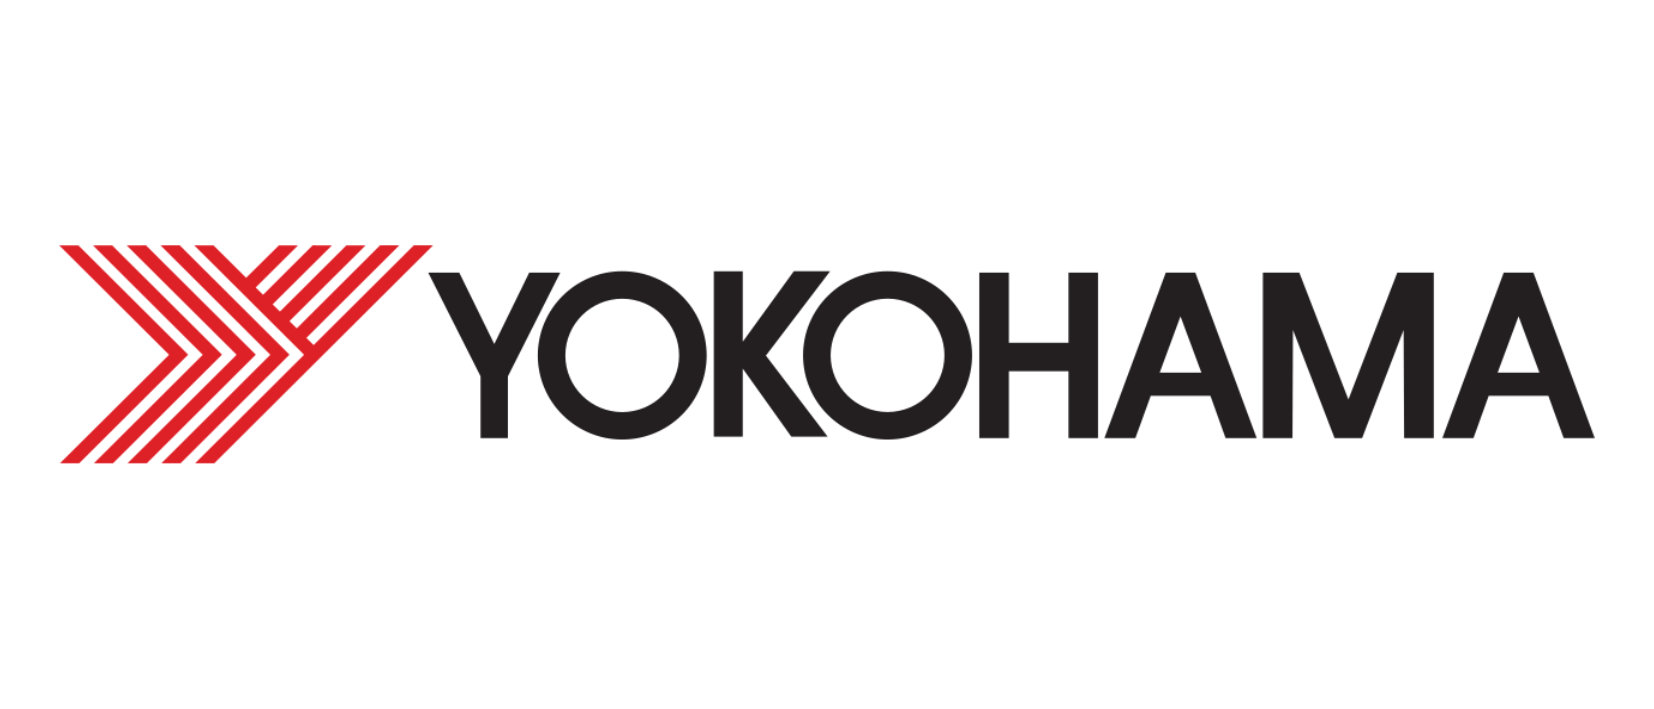 Logo Yokohama bei Weichberger